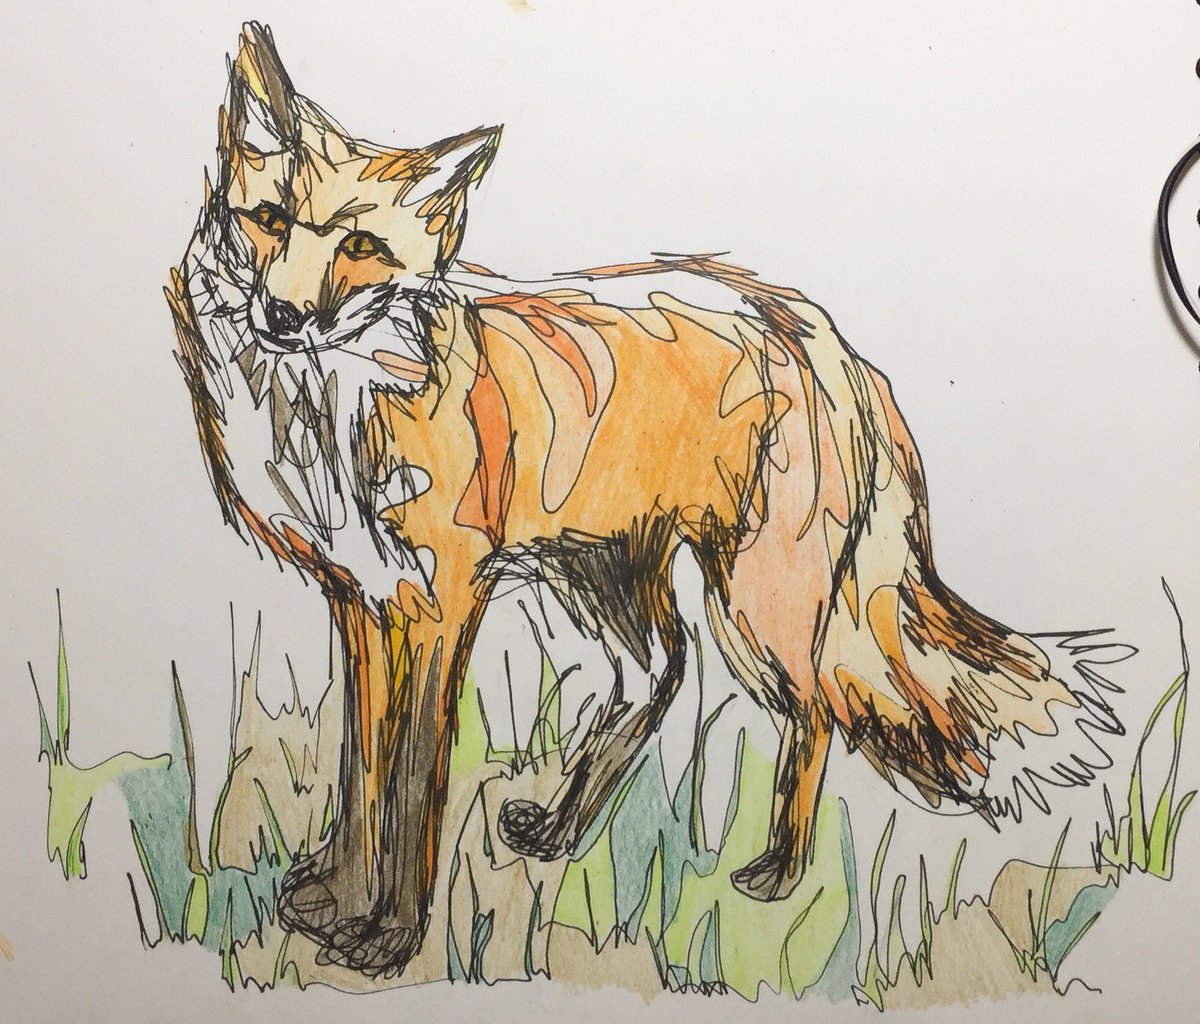 #ink #inktober #inktober2017 #inky #illustration #illustrator #art #artist #woodland #woodlandillustration #fox #continuousline